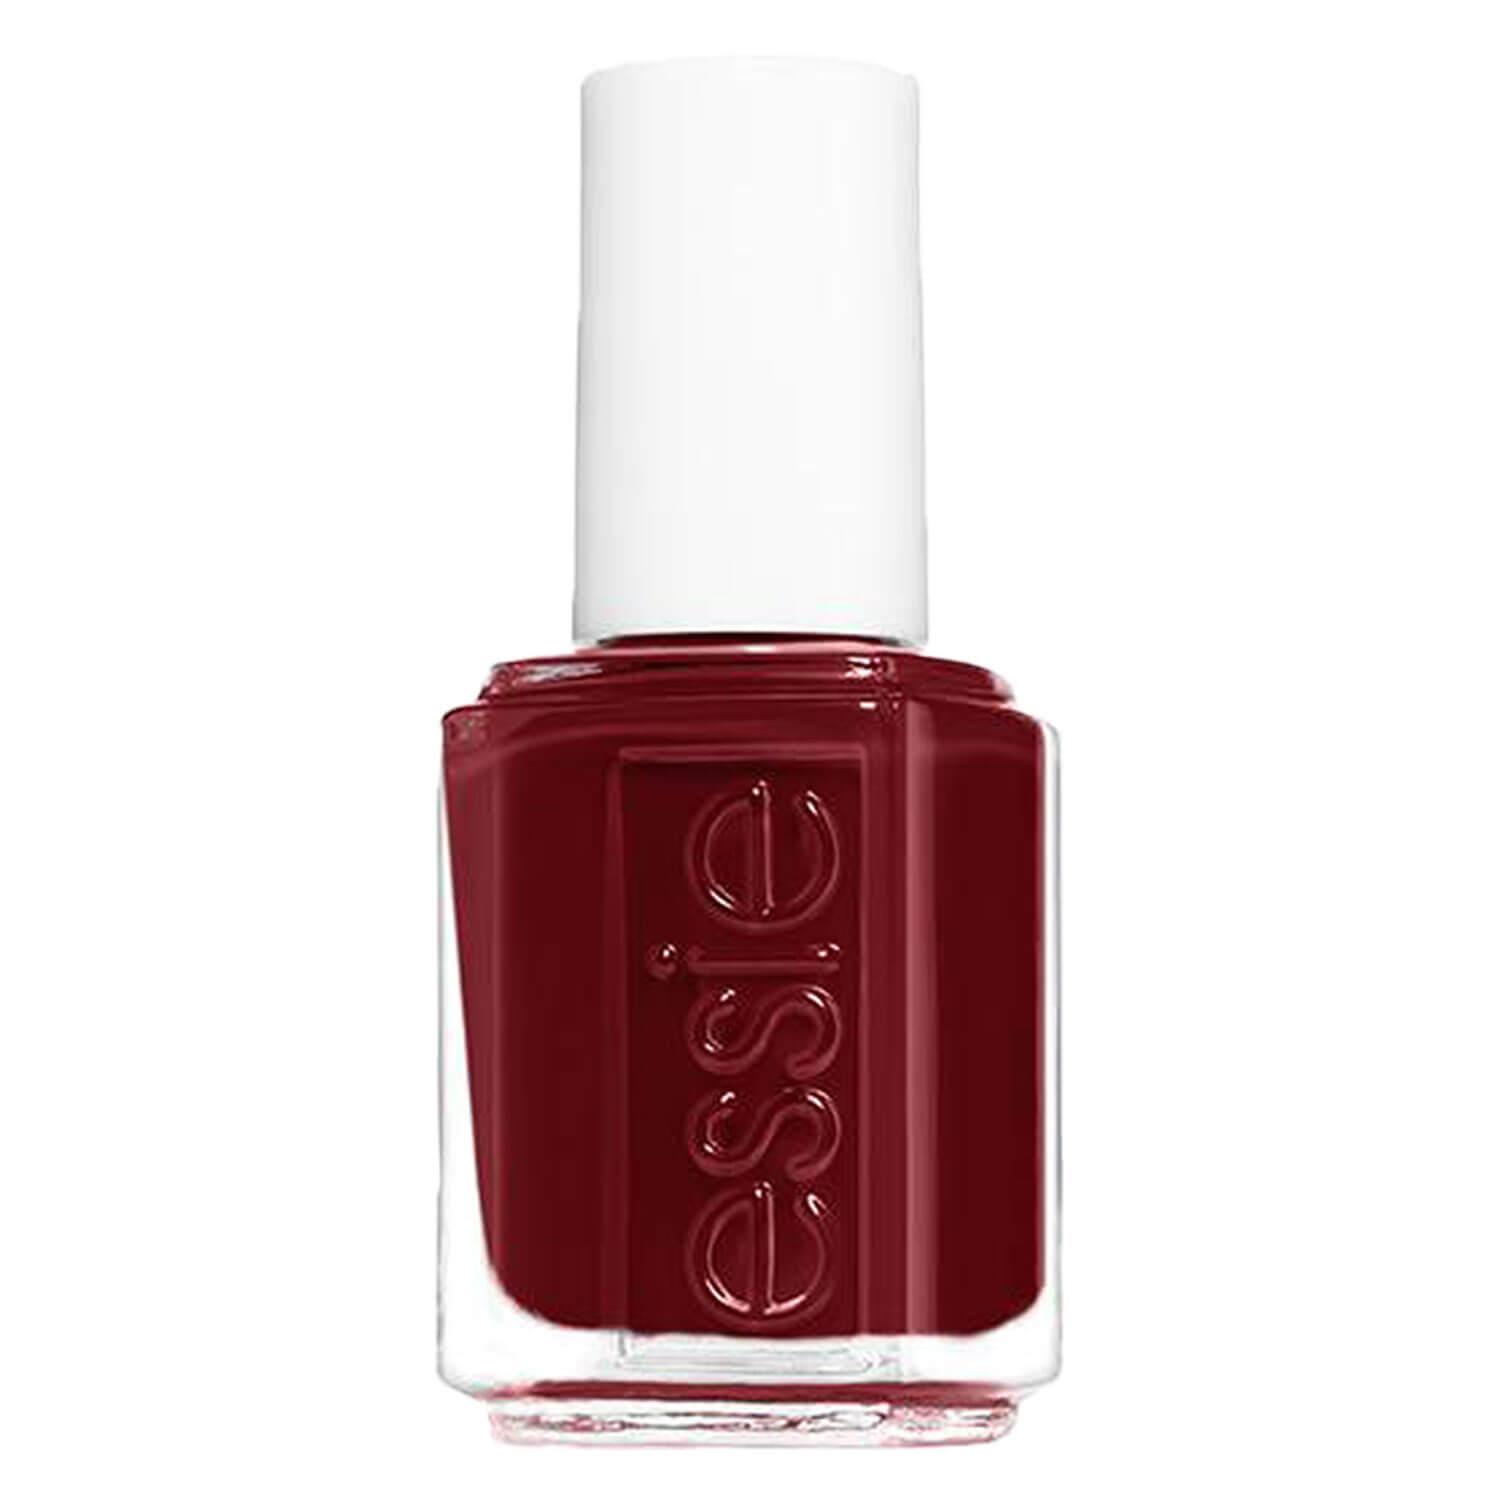 essie nail polish - berry naughty 726